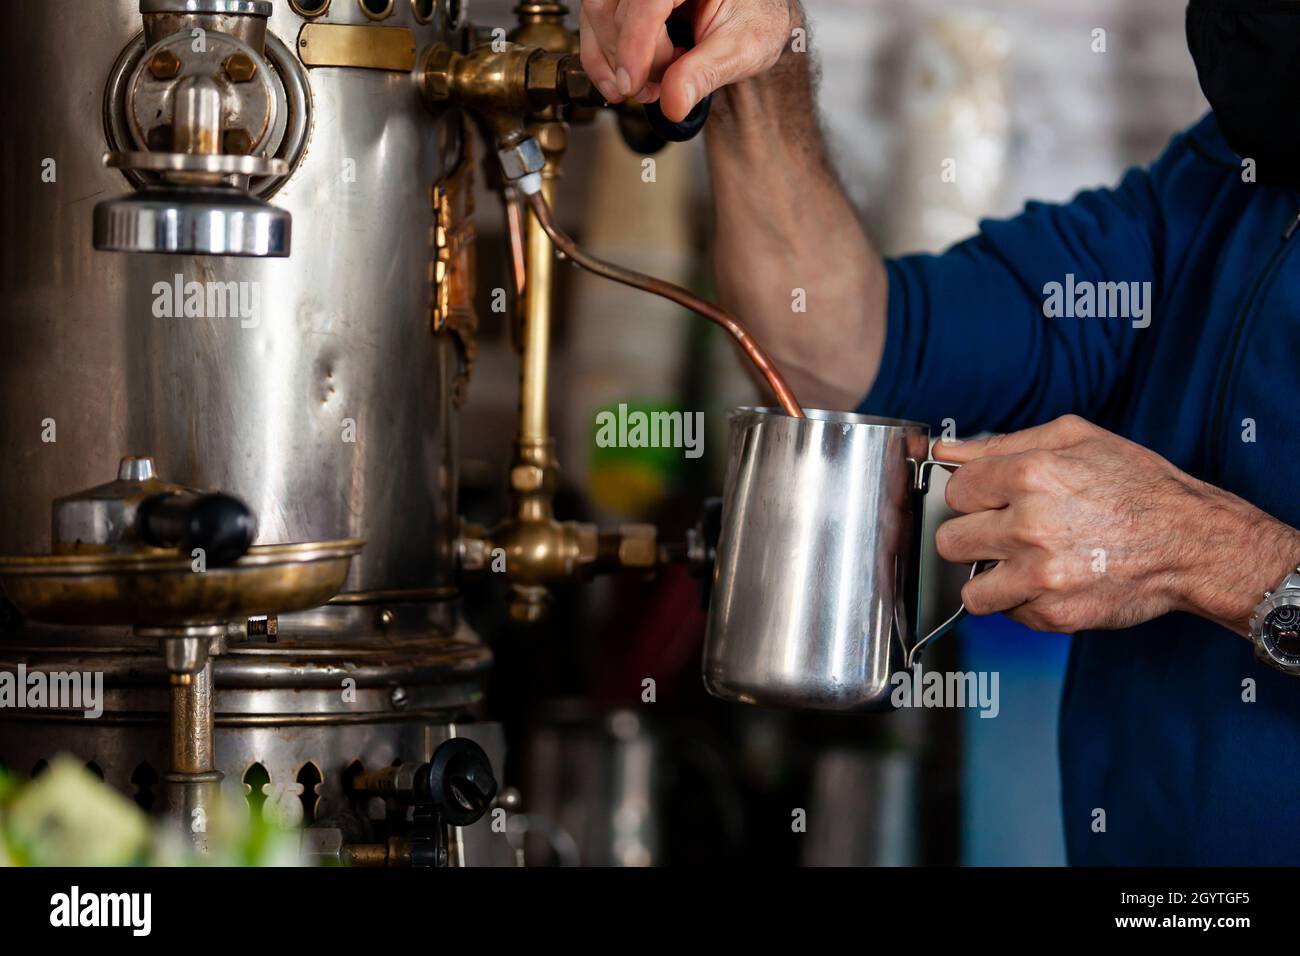 https://c8.alamy.com/comp/2GYTGF5/man-preparing-coffee-with-an-antique-coffee-maker-machine-2GYTGF5.jpg